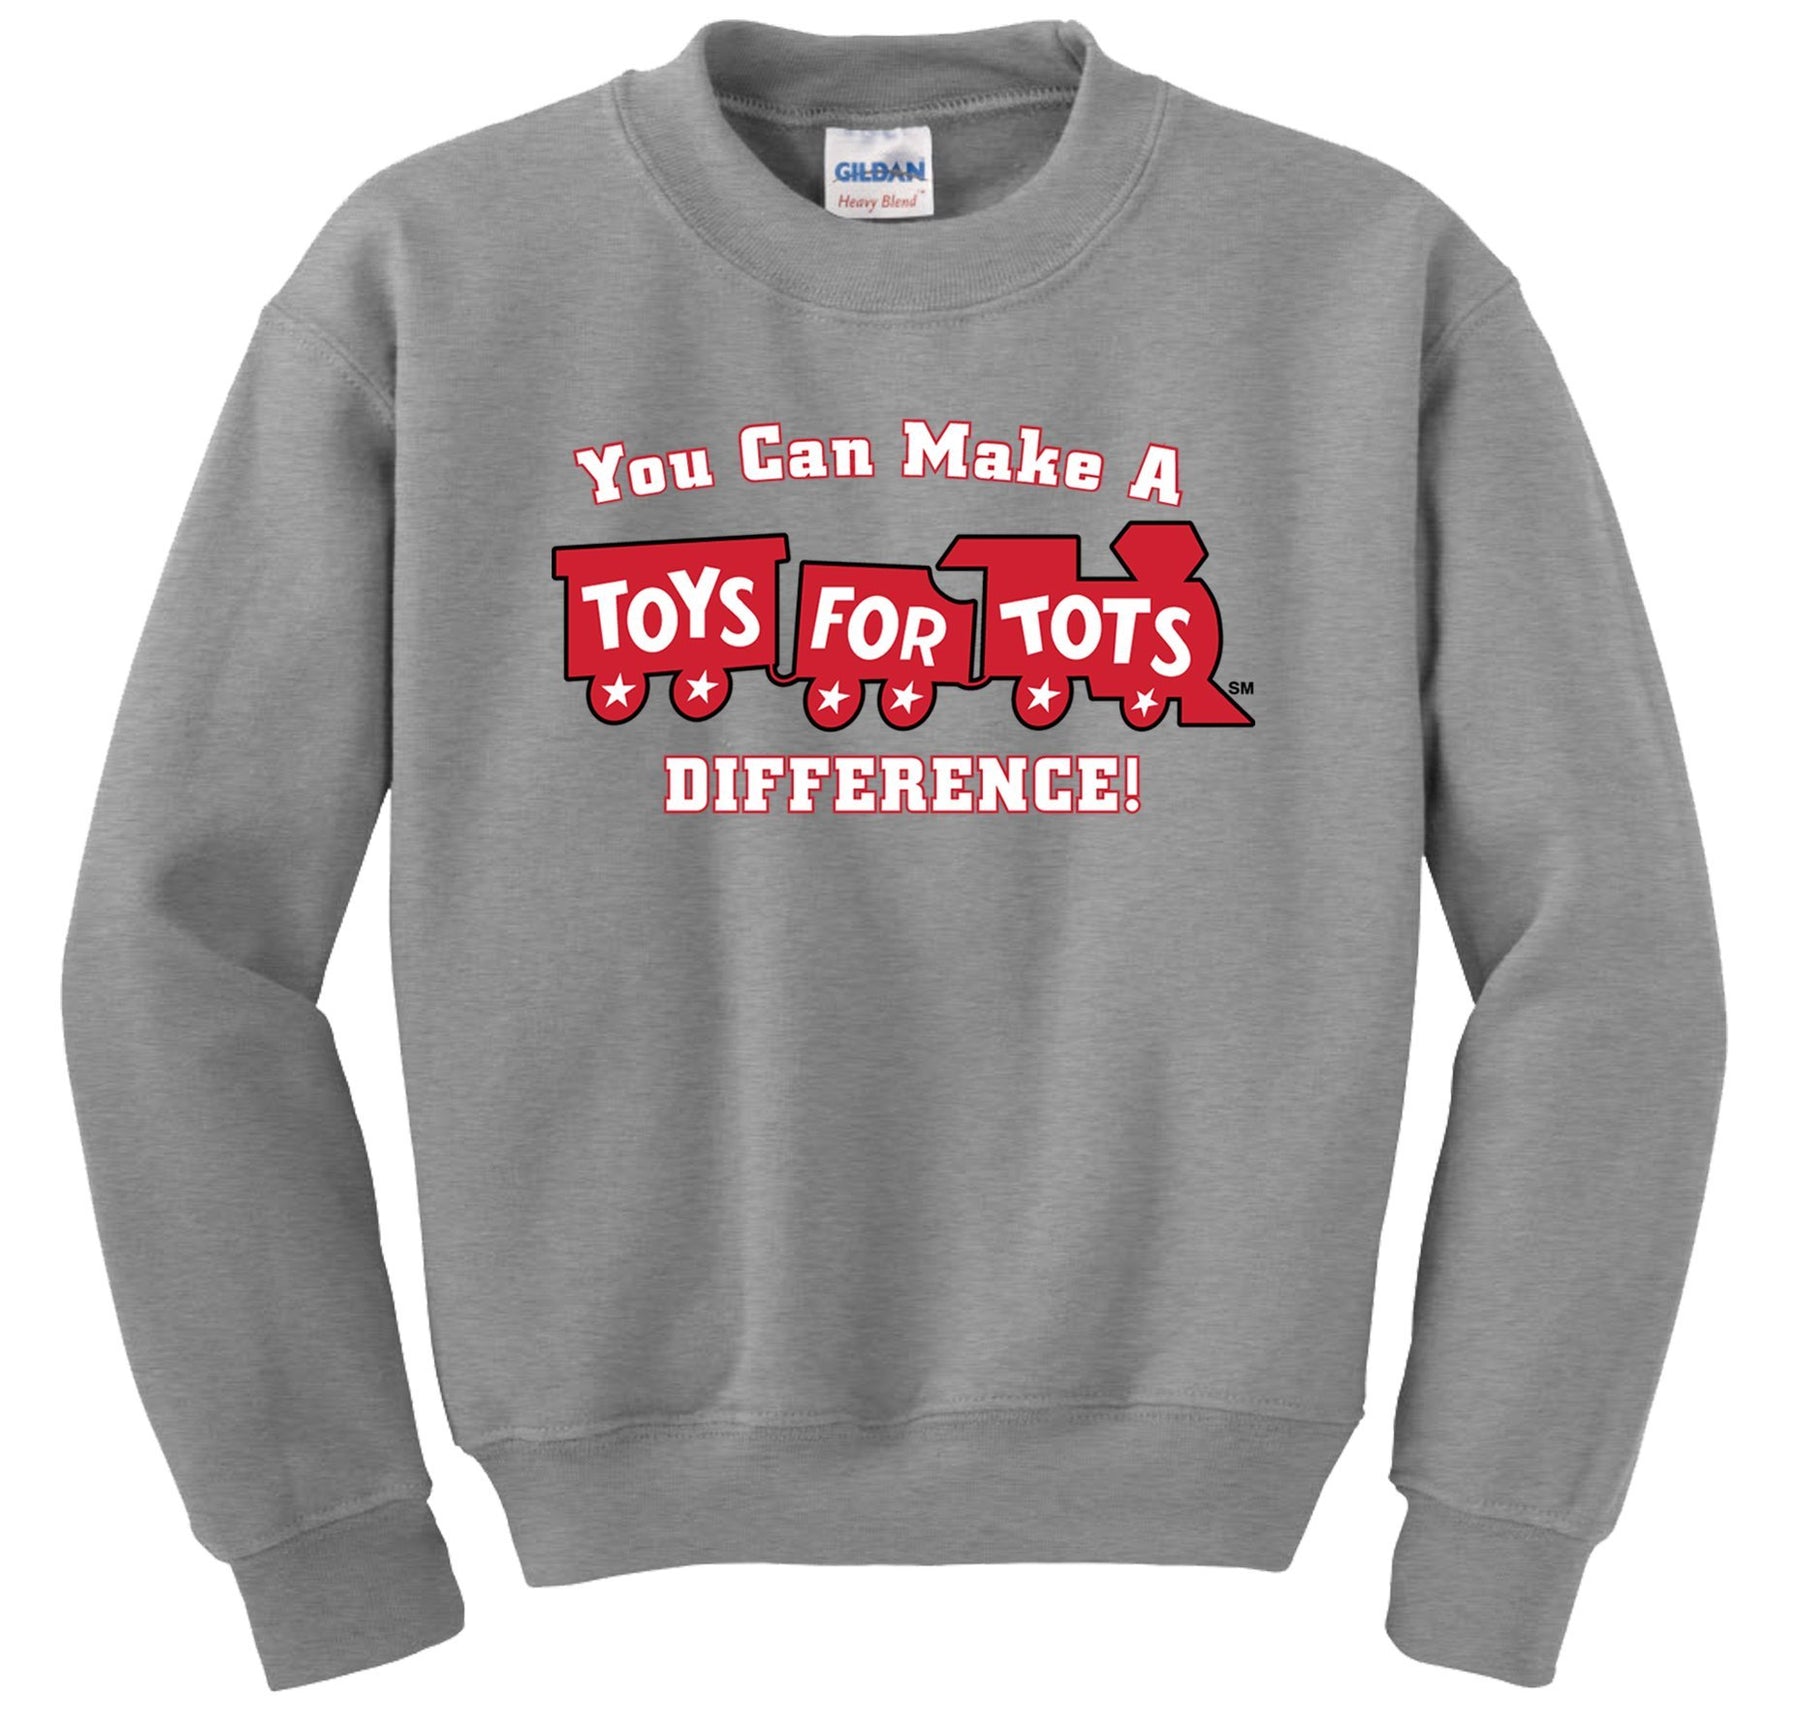 Make a Difference TFT Train Sweatshirt TFT Sweatshirt/hoodie marinecorpsdirecttft S SPORT GRAY 